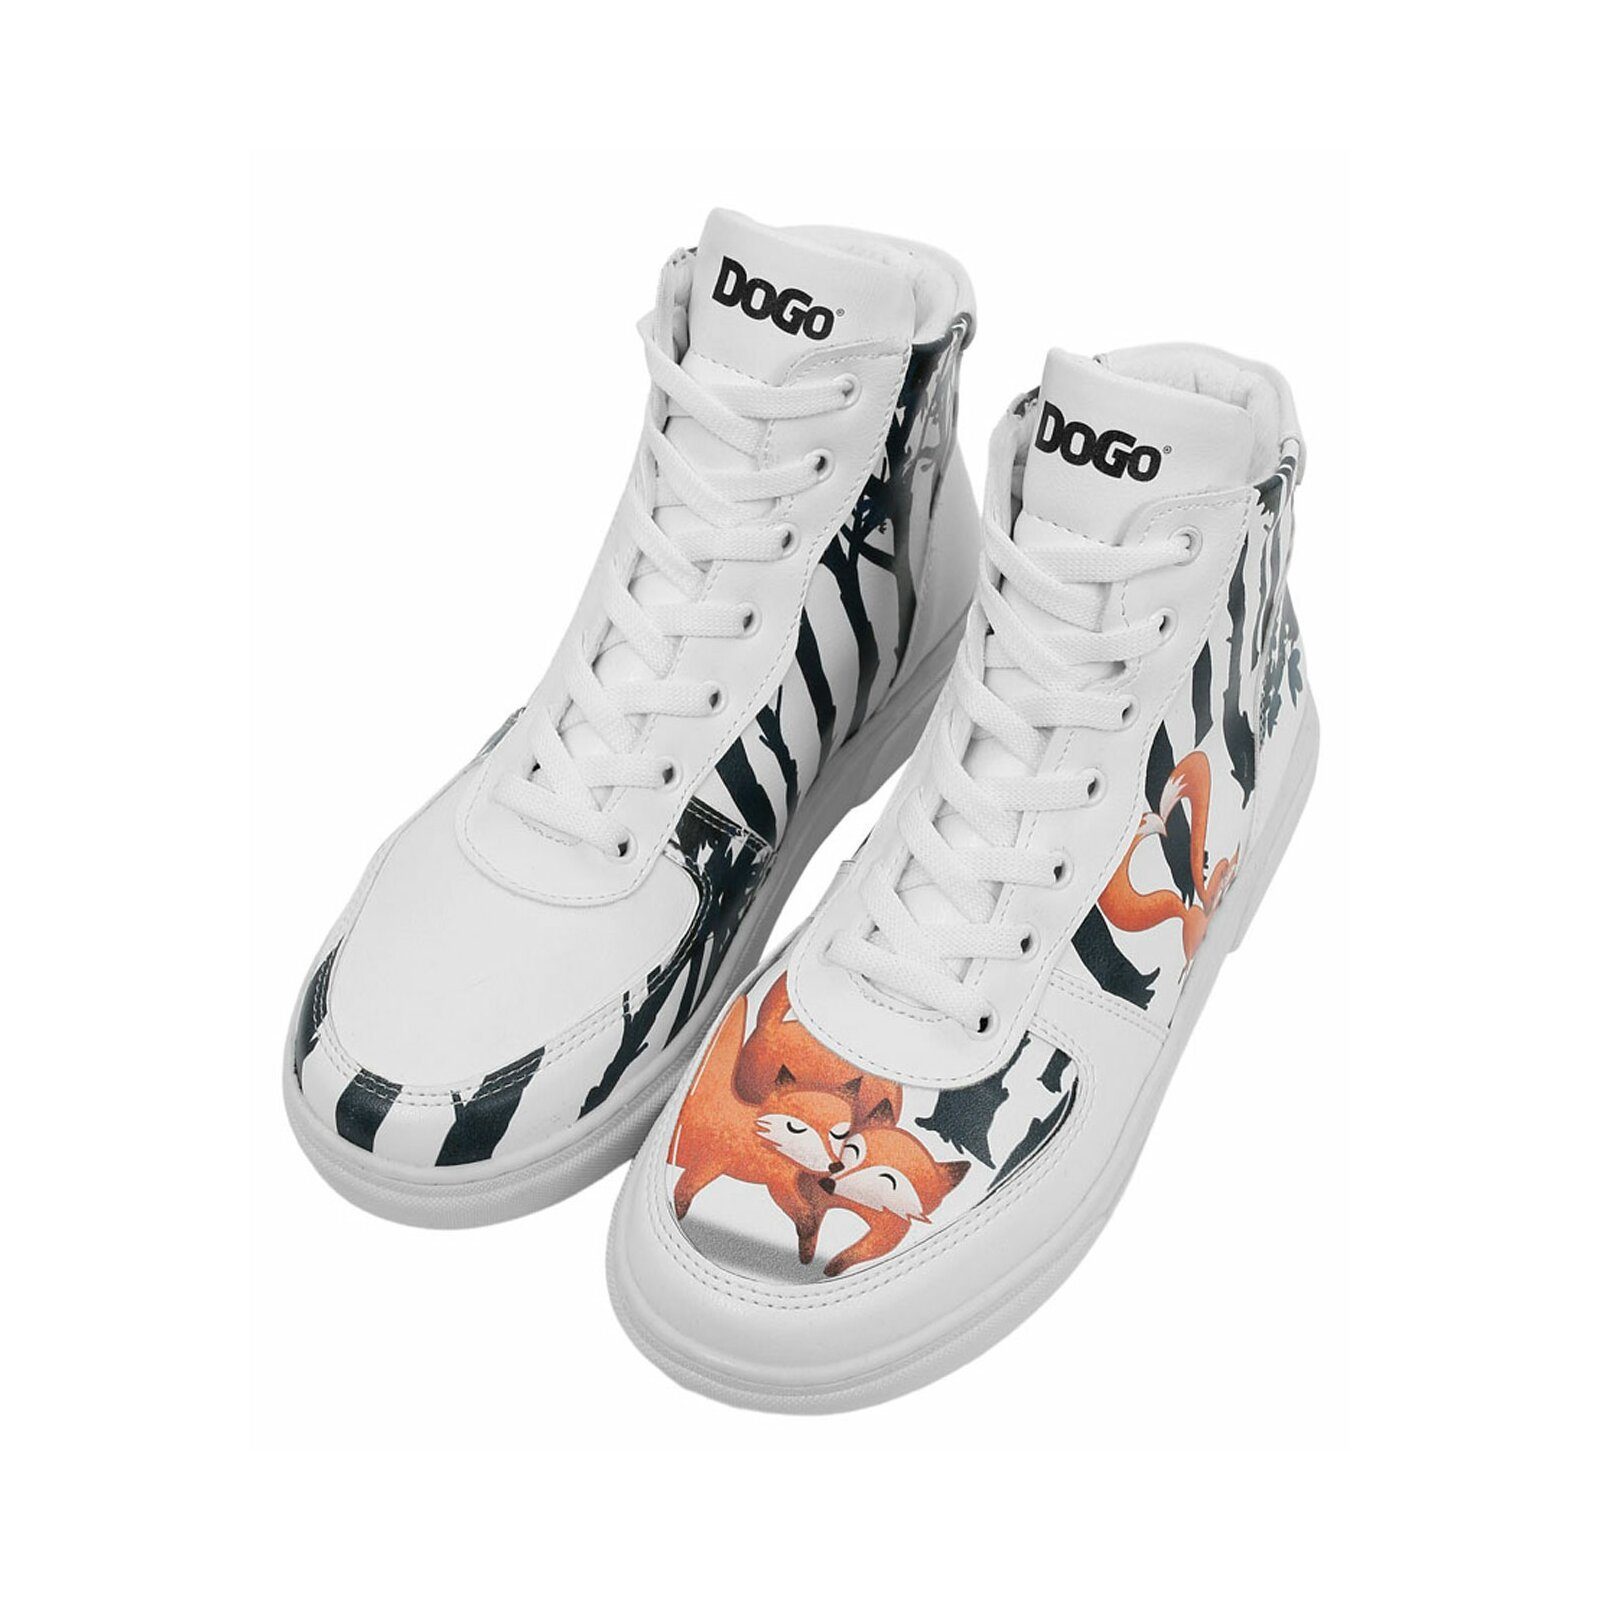 DOGO Ace Boots Stiefelette Vegan Orange